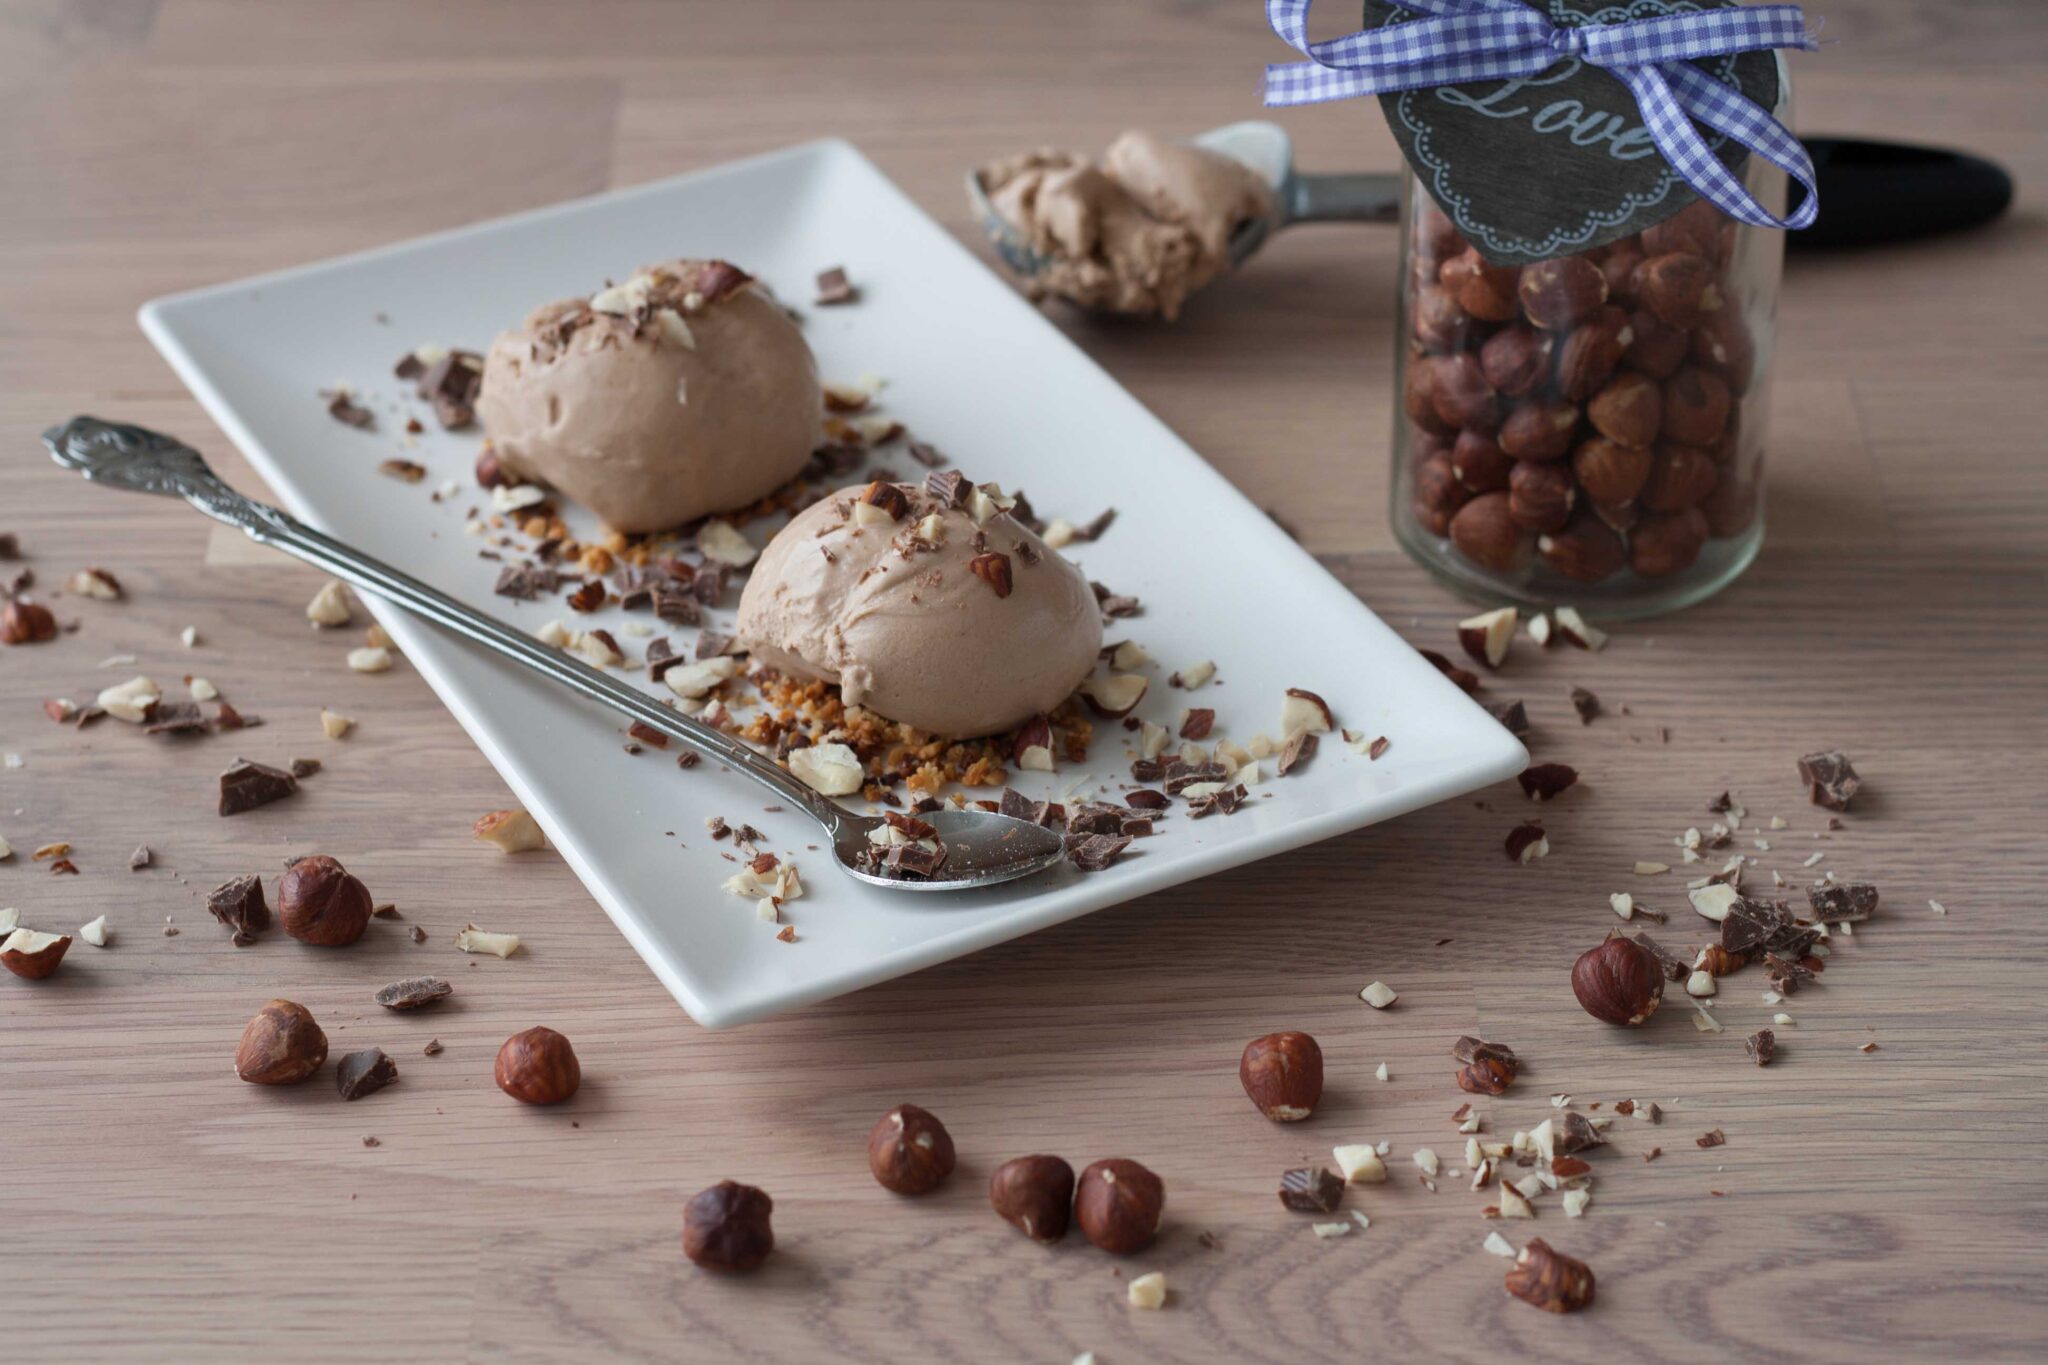 Recipe for Creamy Hazelnut Ice Cream with Chocolate - The BEST recipe!